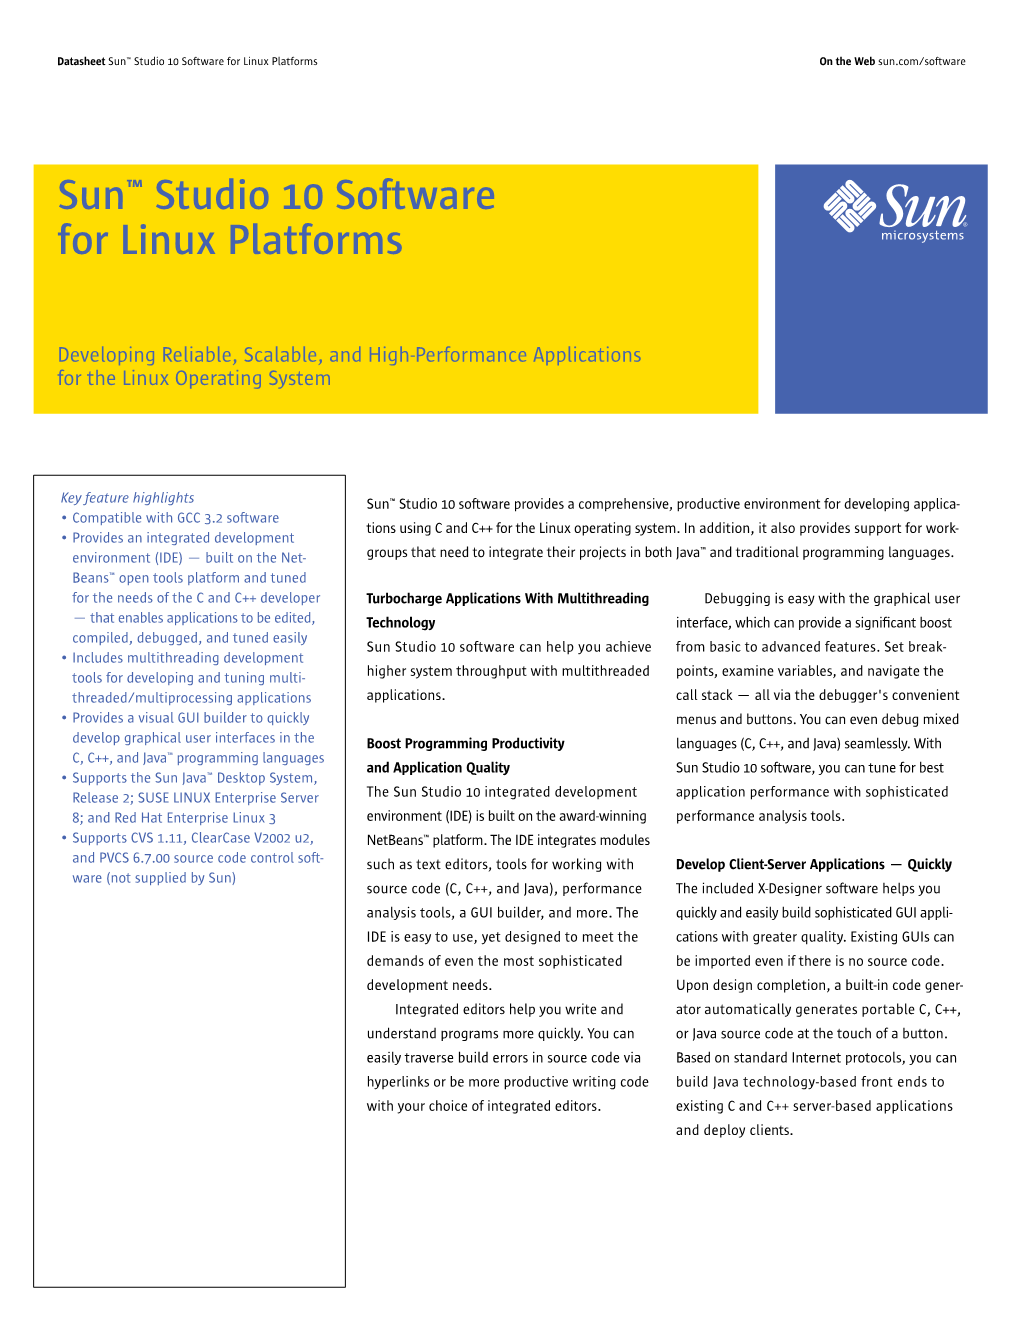 Sun™ Studio 10 Software for Linux Platforms on the Web Sun.Com/Software